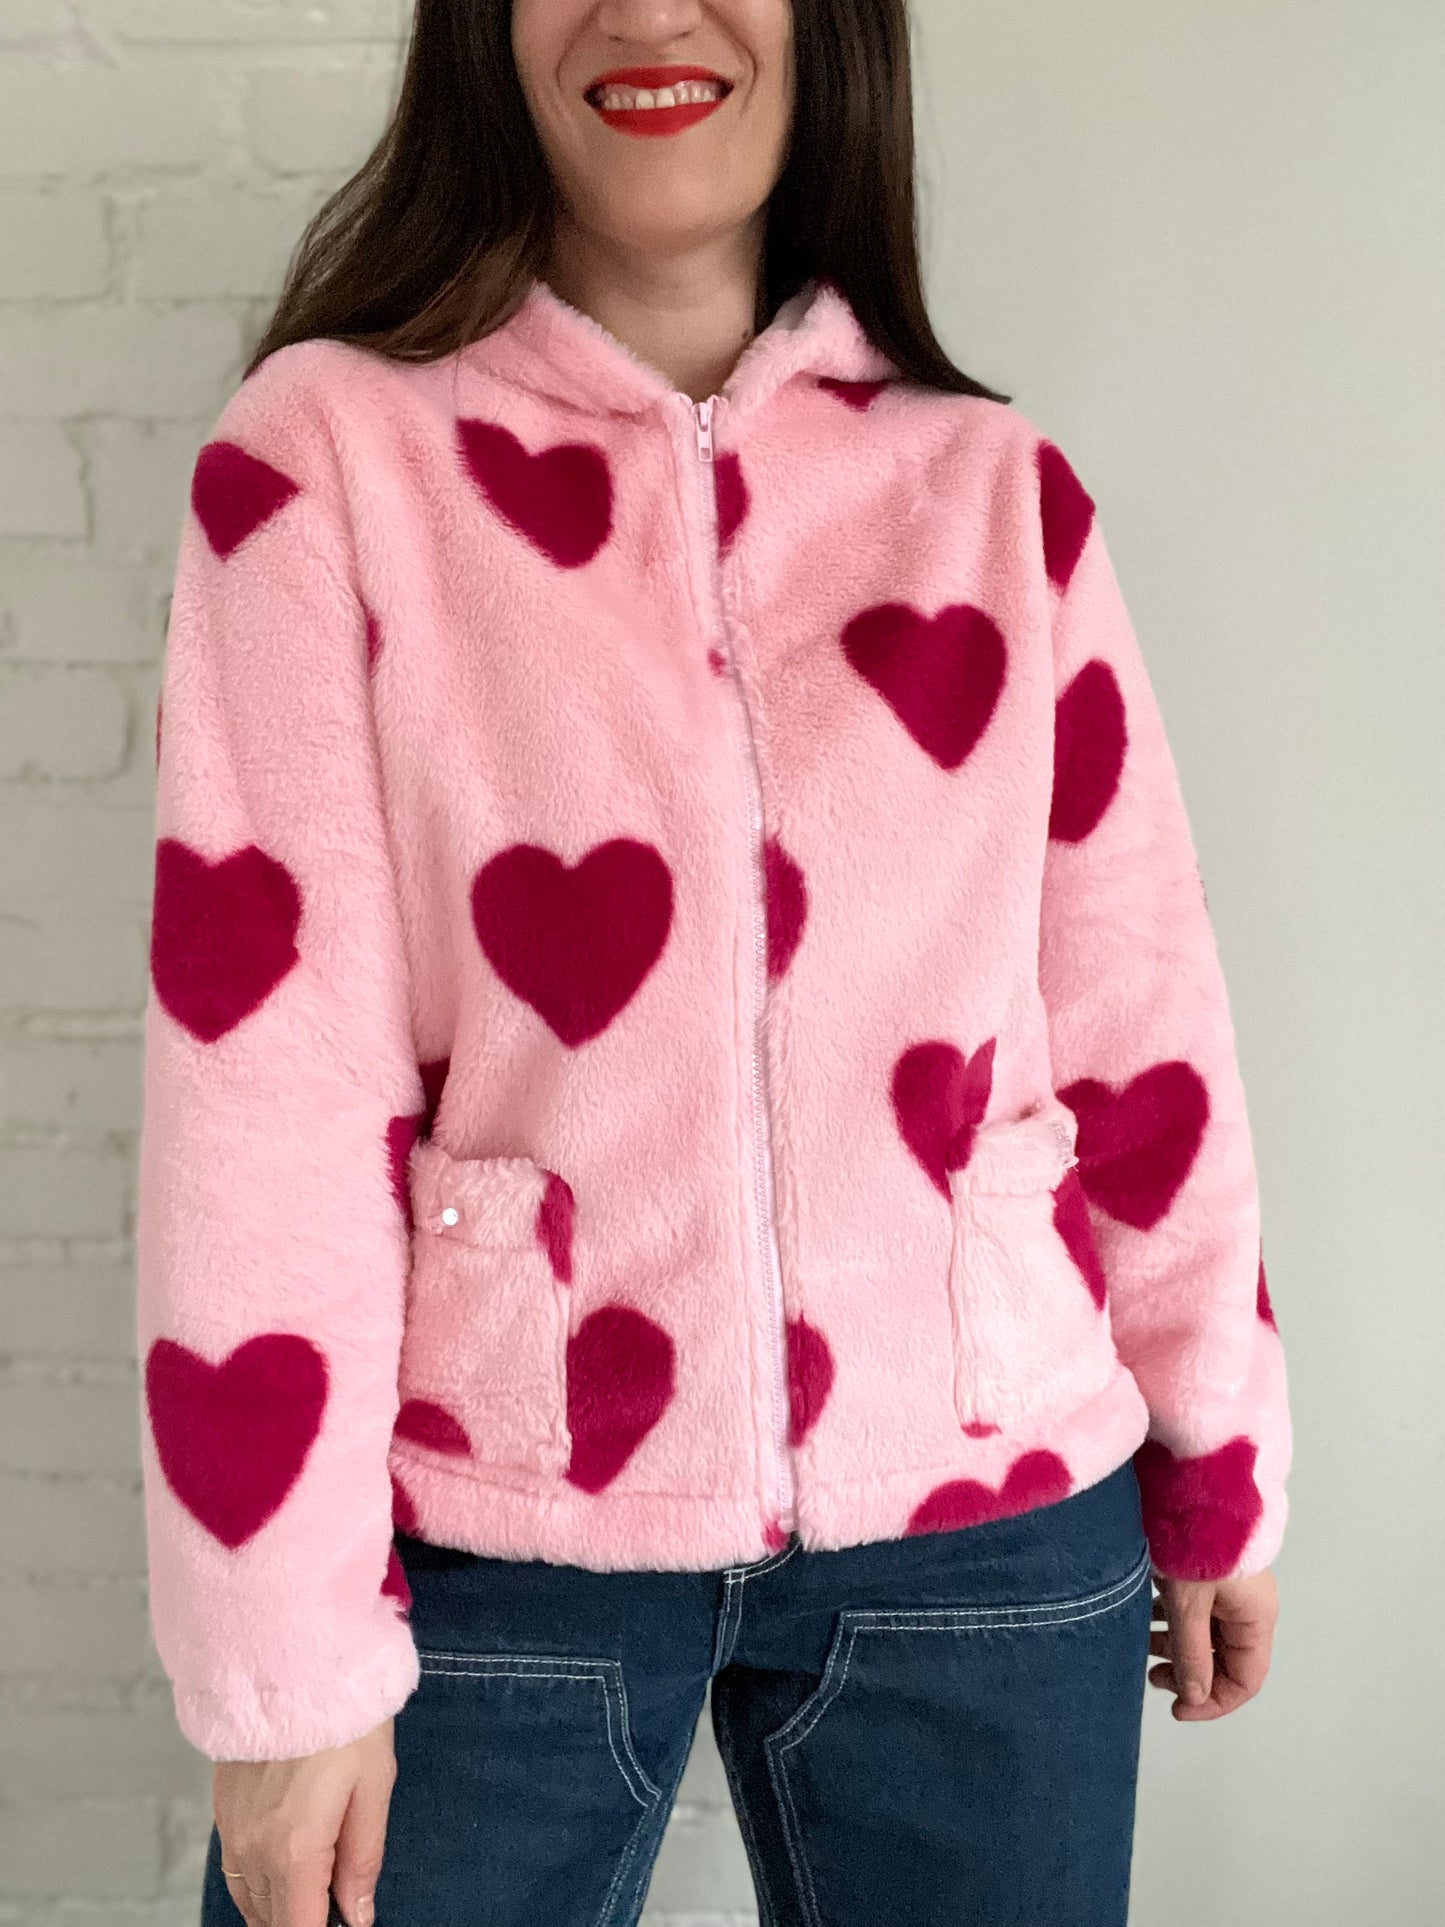 Fluffy Heart Jacket - S/M